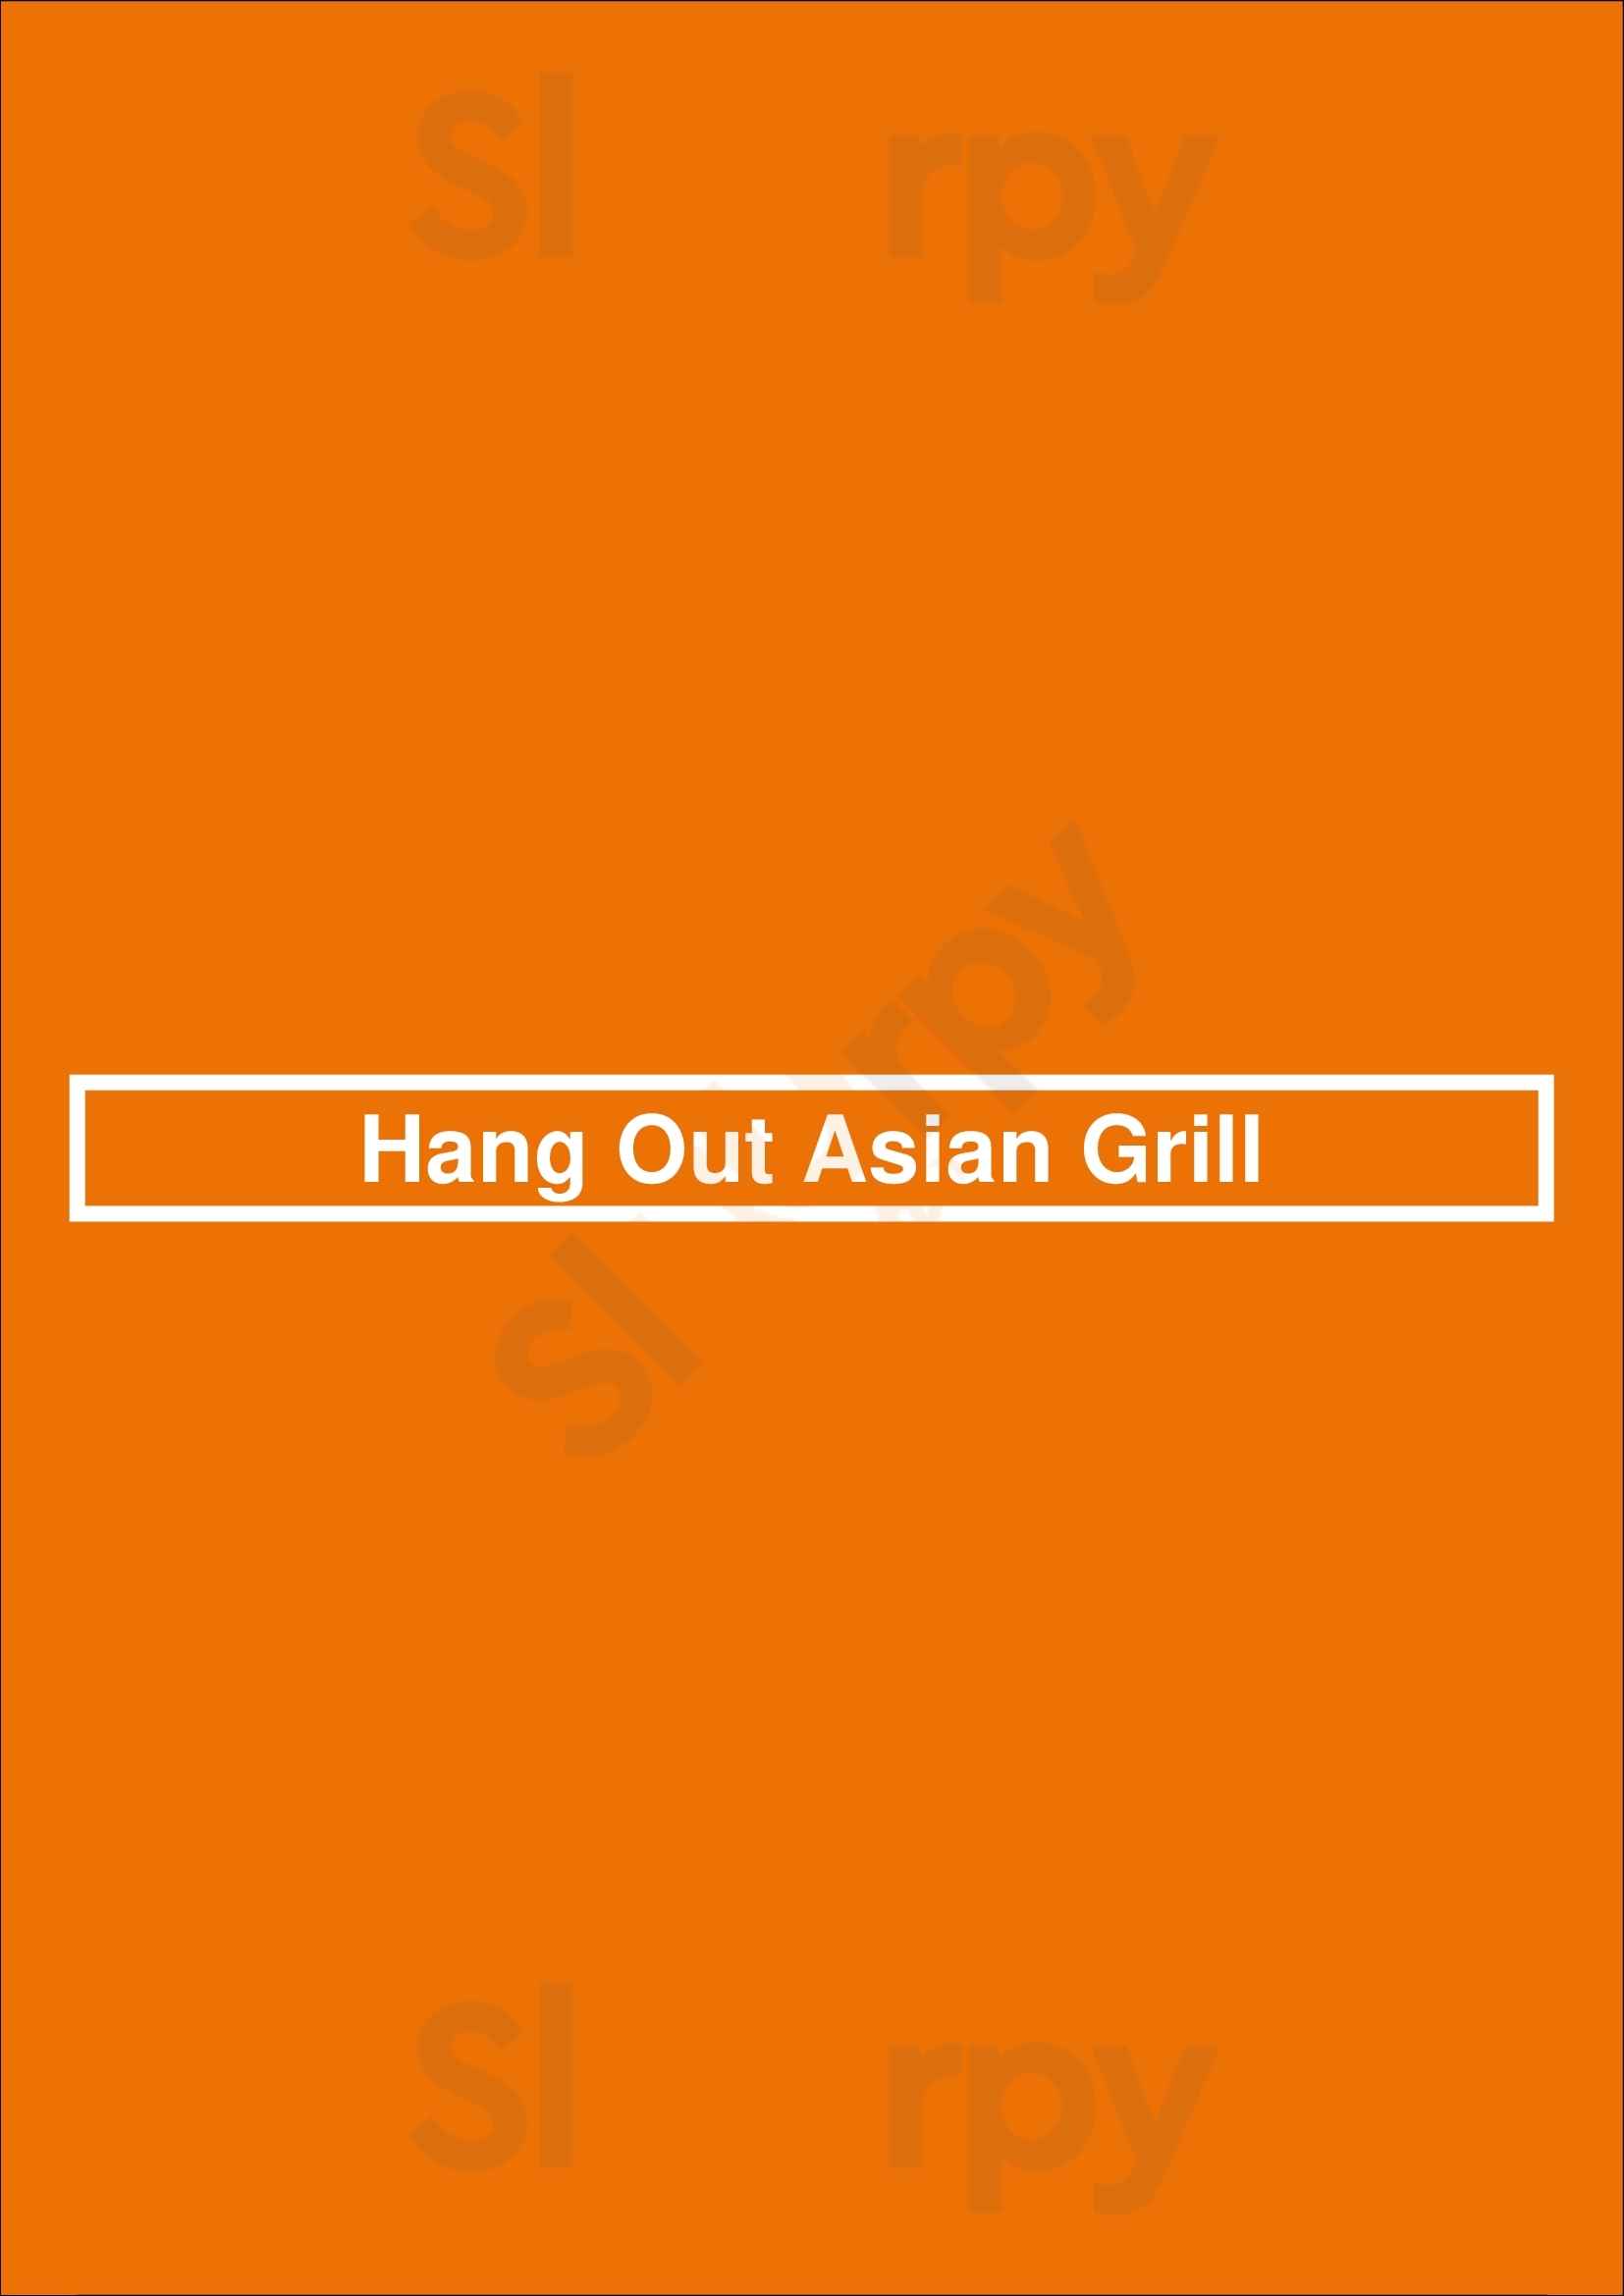 Hang Out Asian Grill Houston Menu - 1